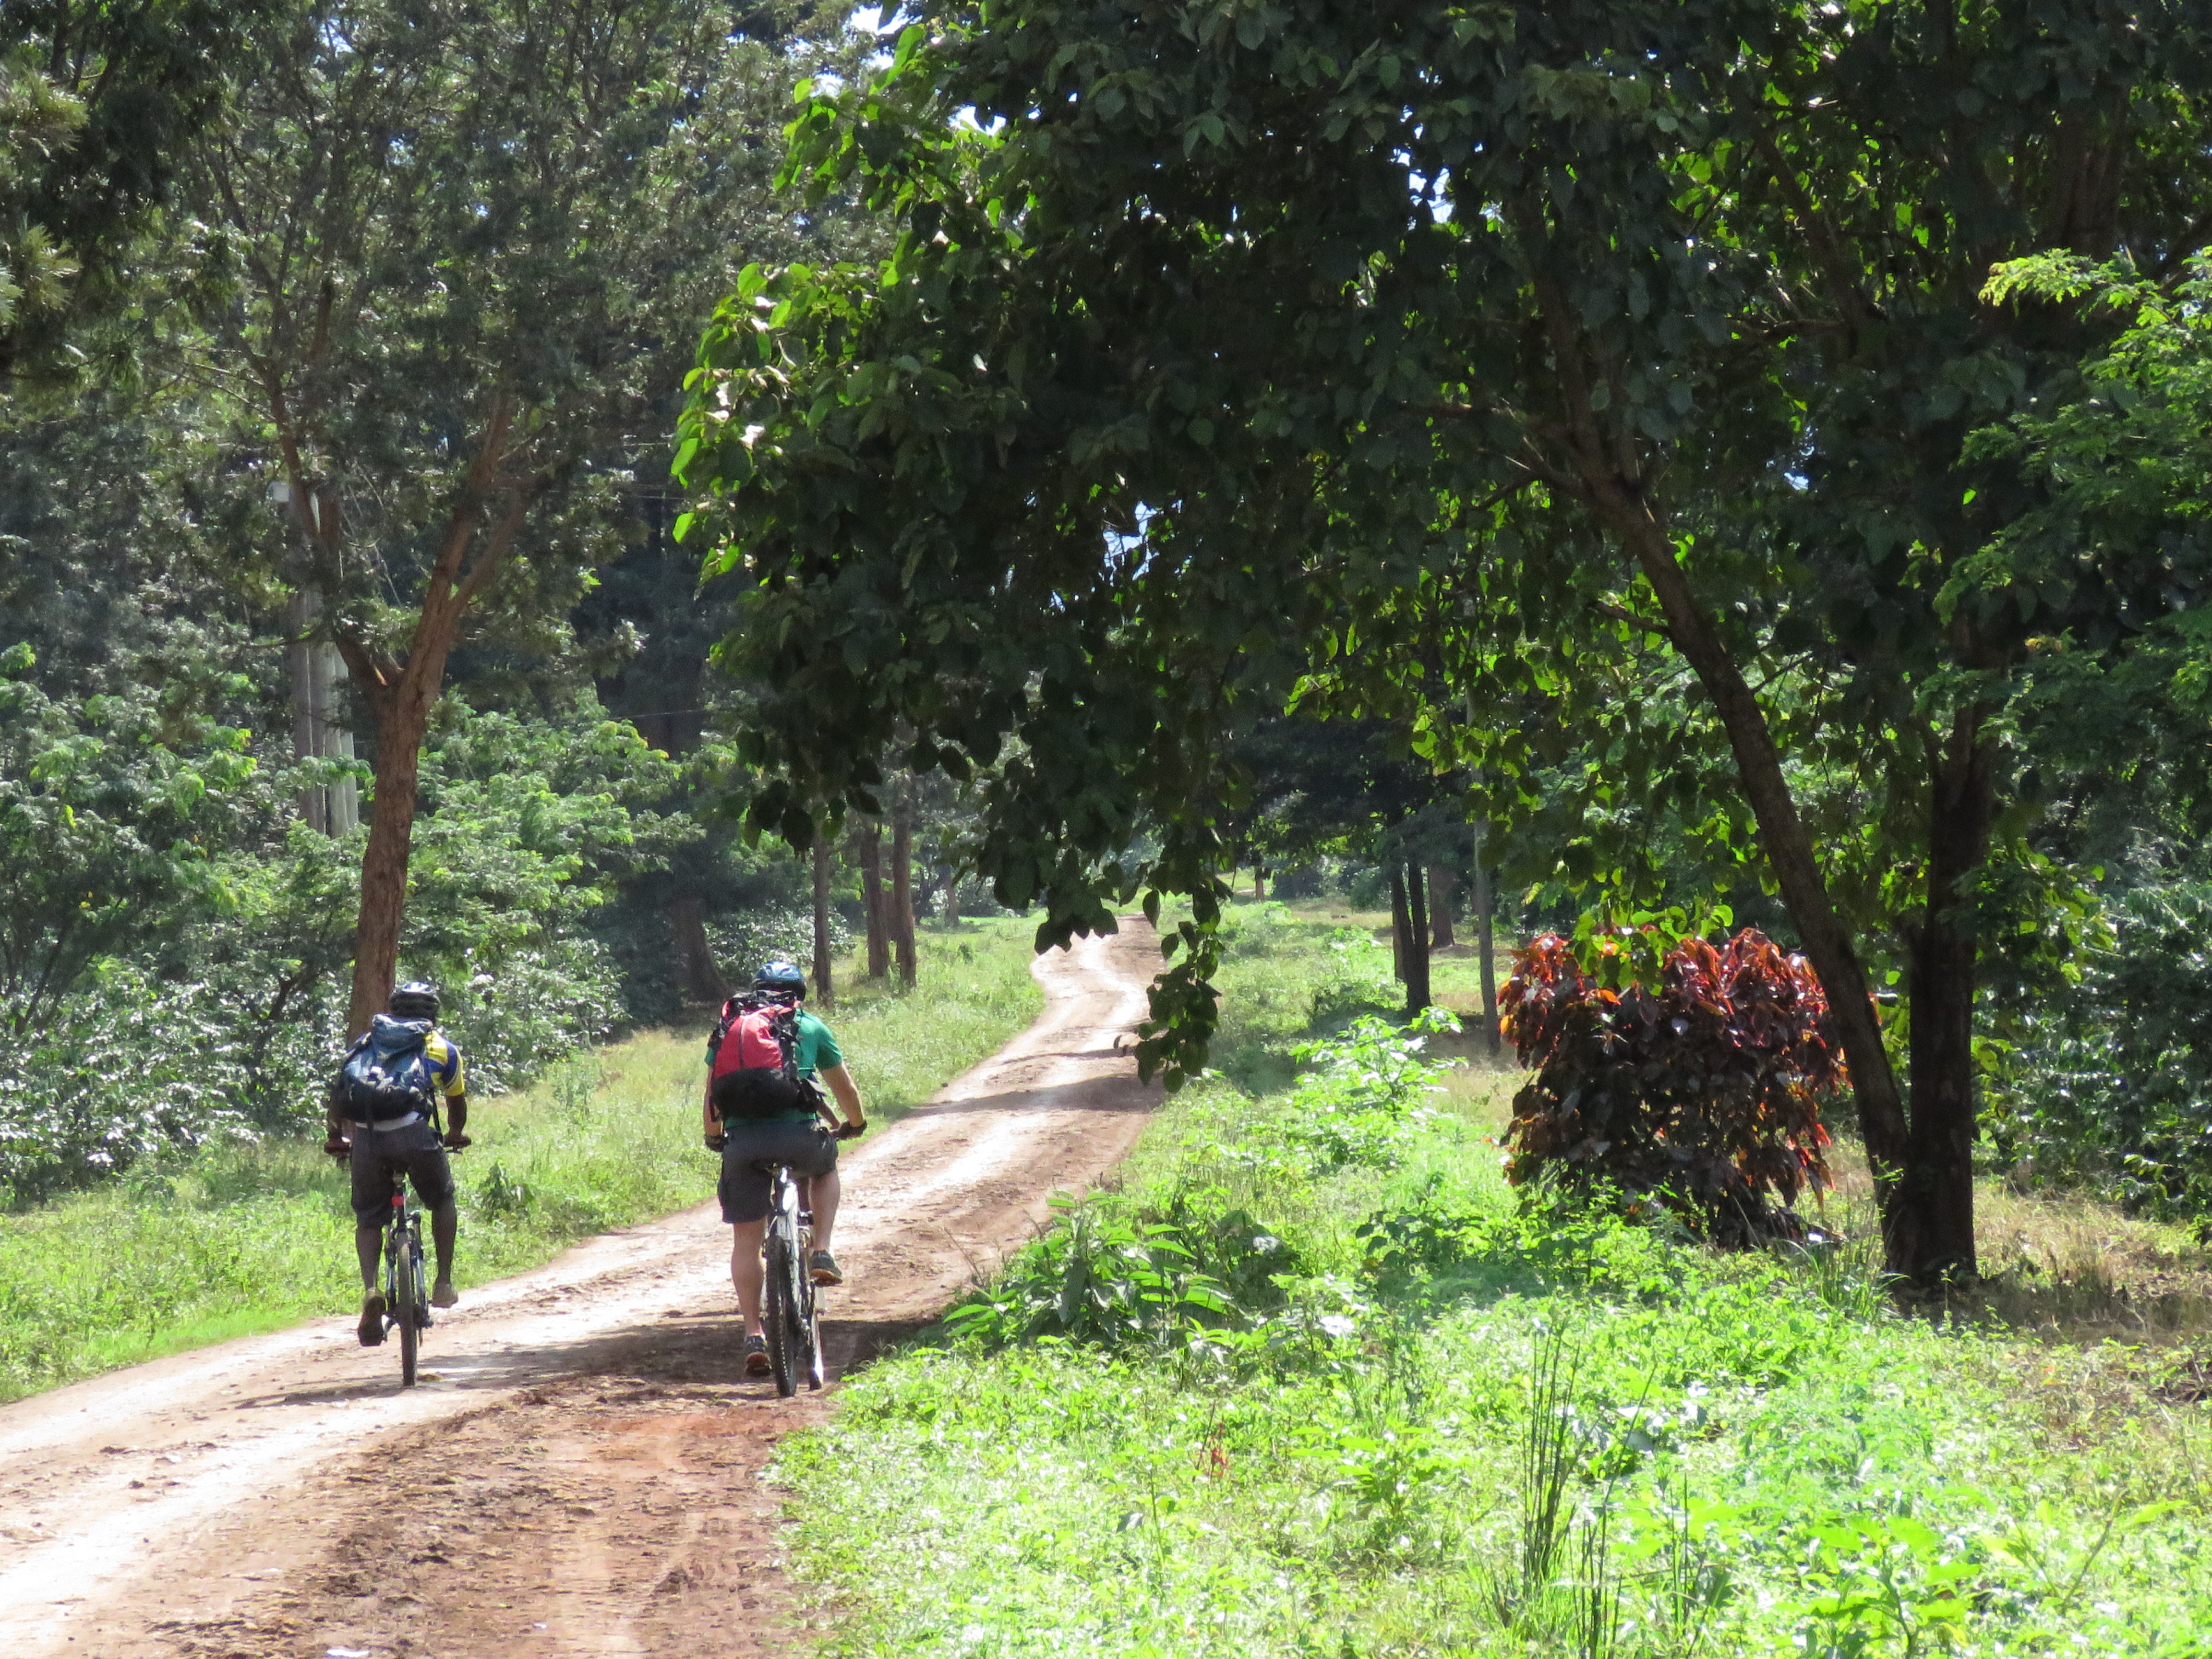 wp-content/uploads/itineraries/Kilimanjaro/tz-biking (3).jpg